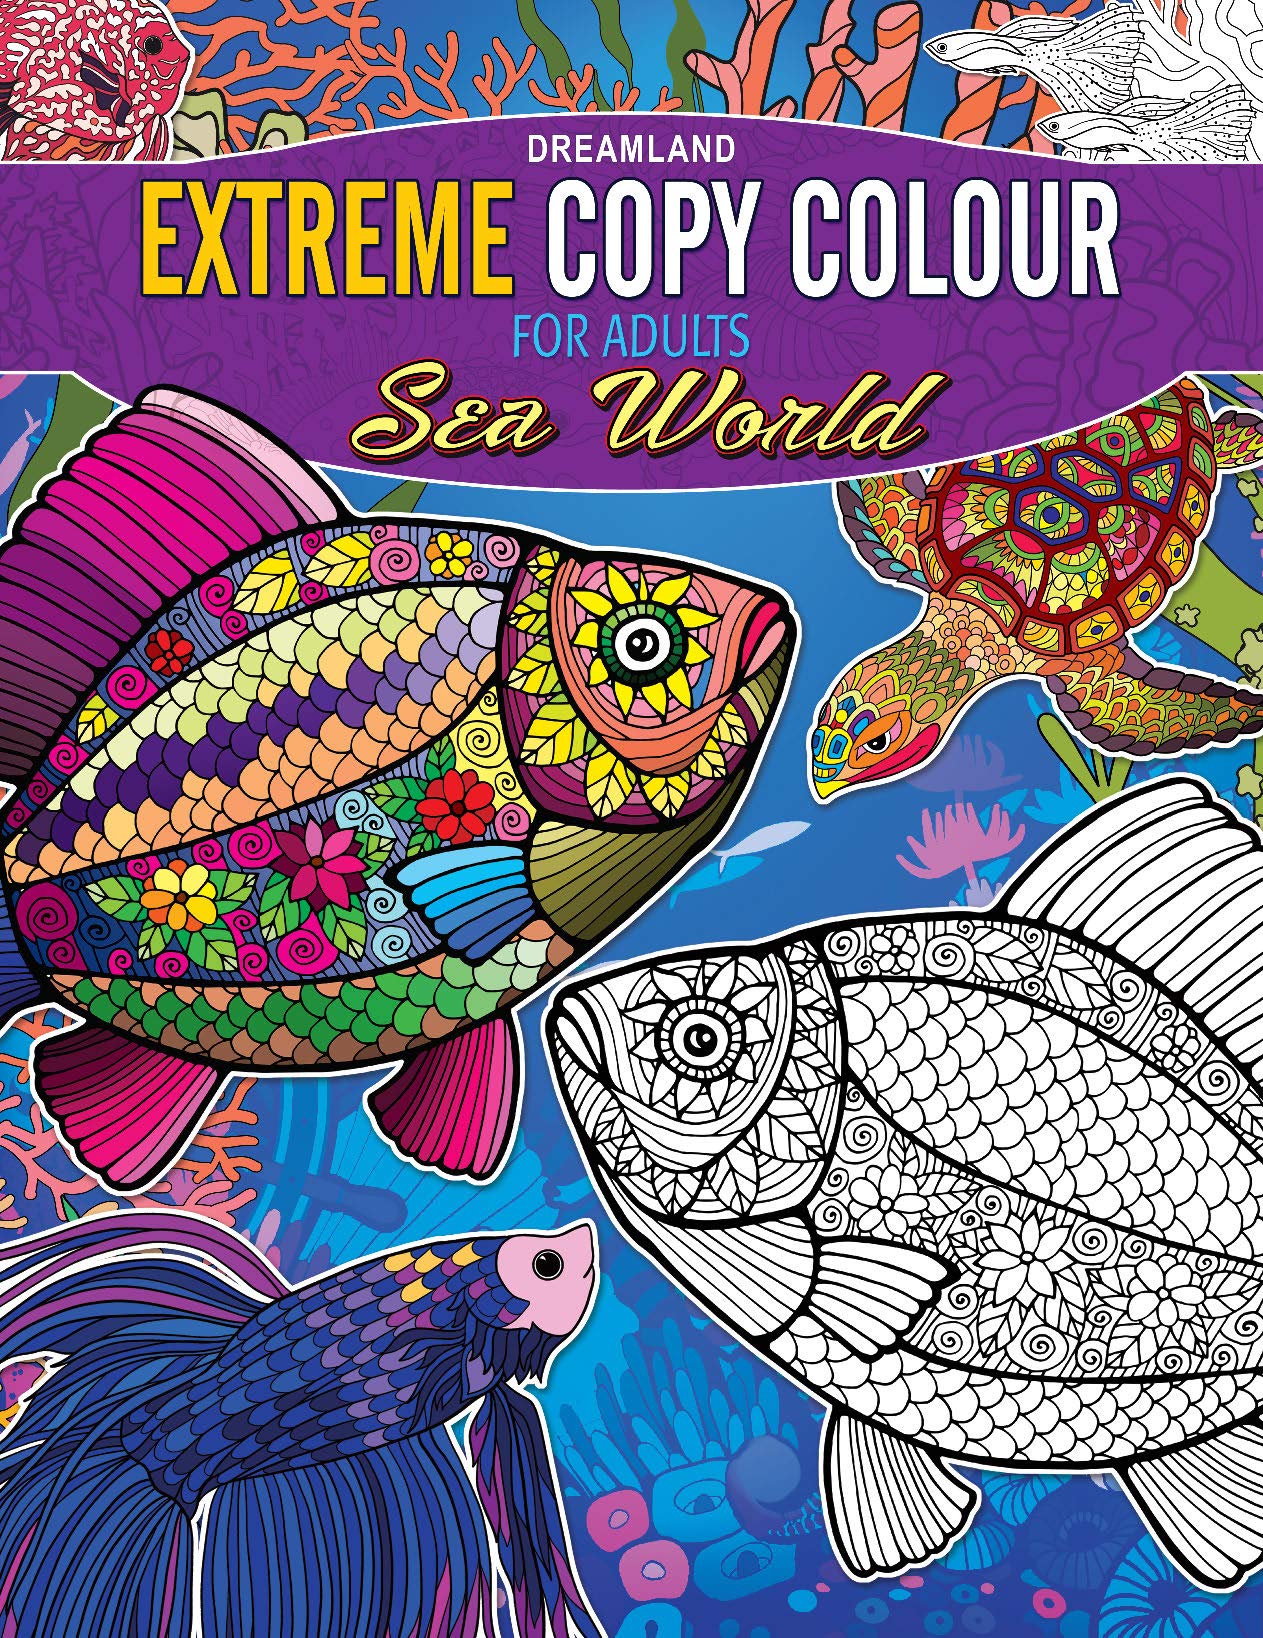 Extreme Copy Colour - Sea World